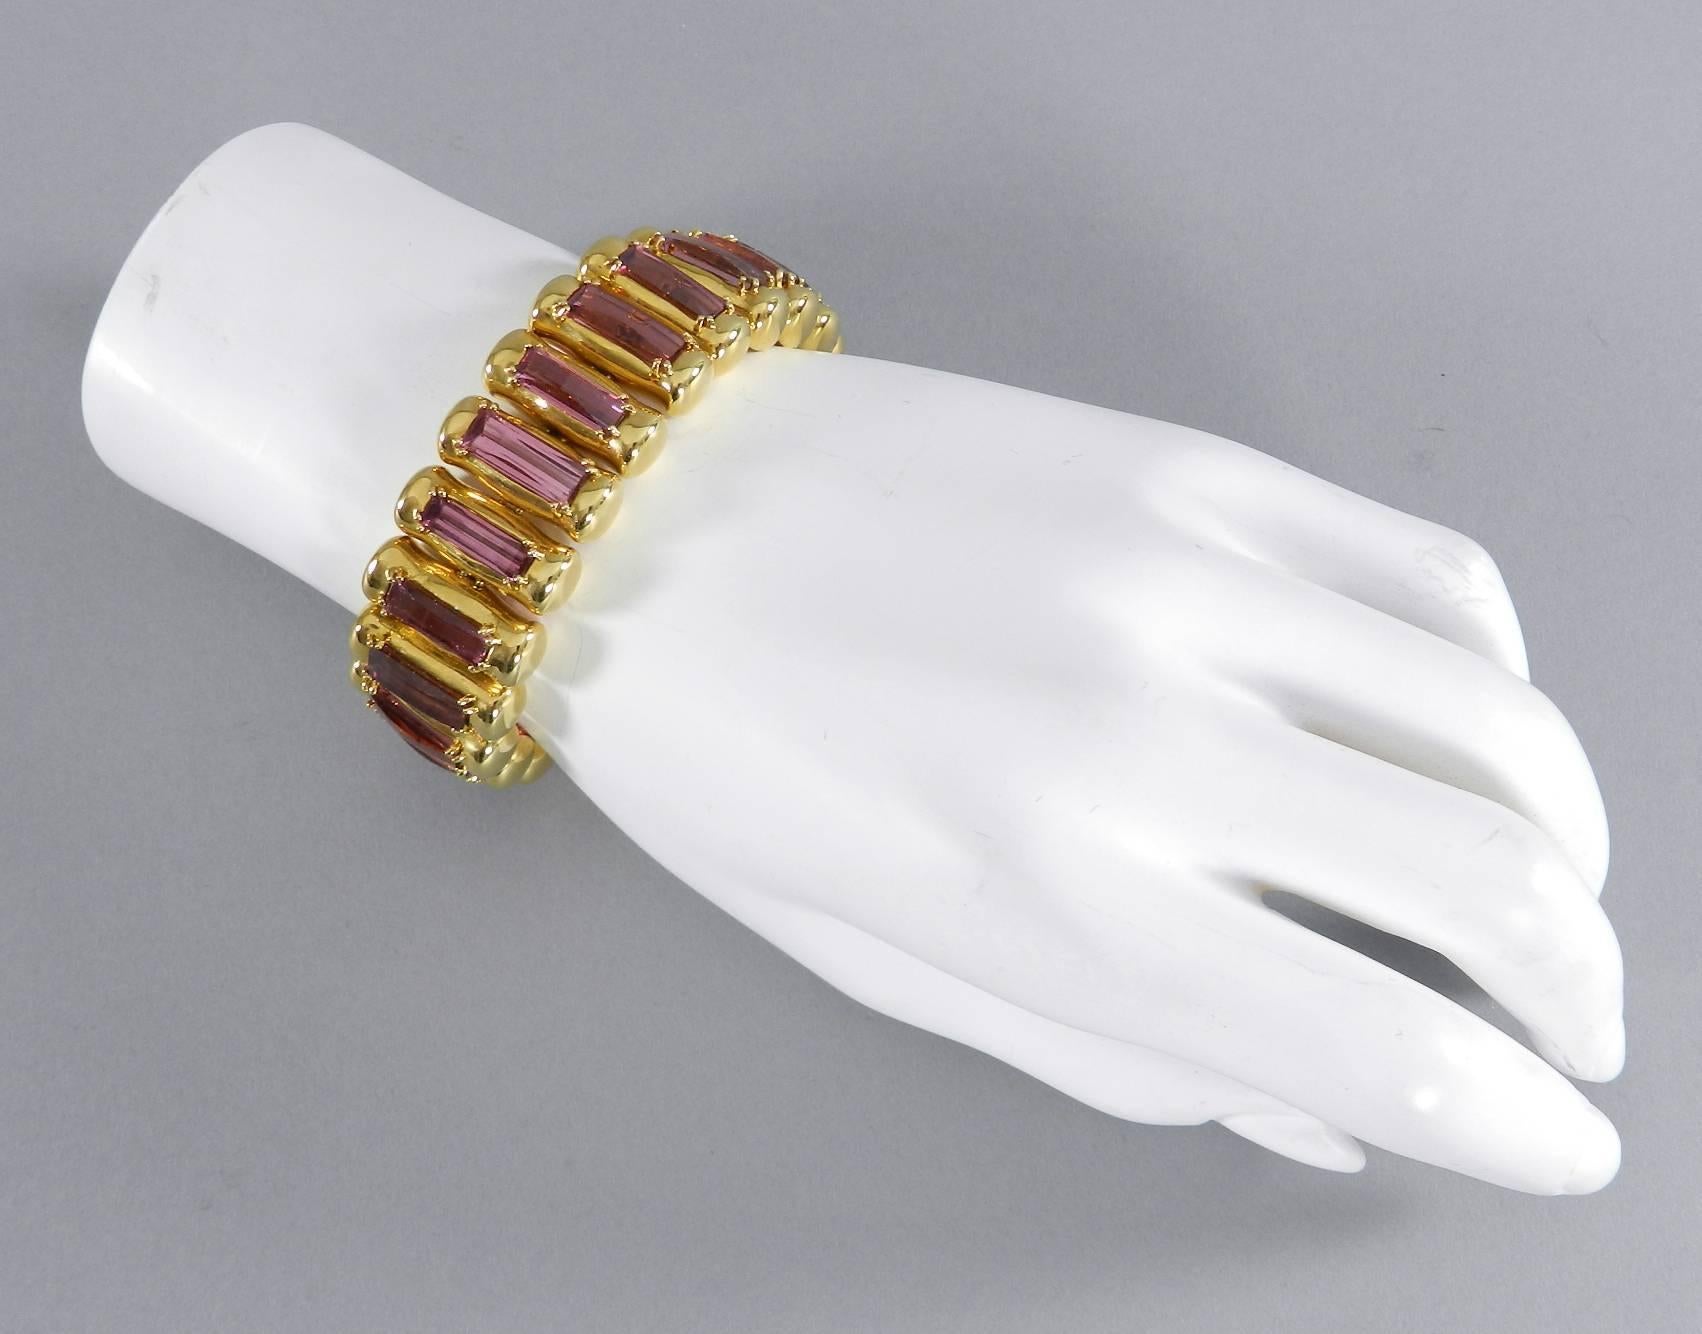 Tony Duquette 18k yellow gold and amethyst link bracelet. Circa 1999. Warm pinkish purple amethysts. Signed Tony Duquette 18k. Bracelet measures 7